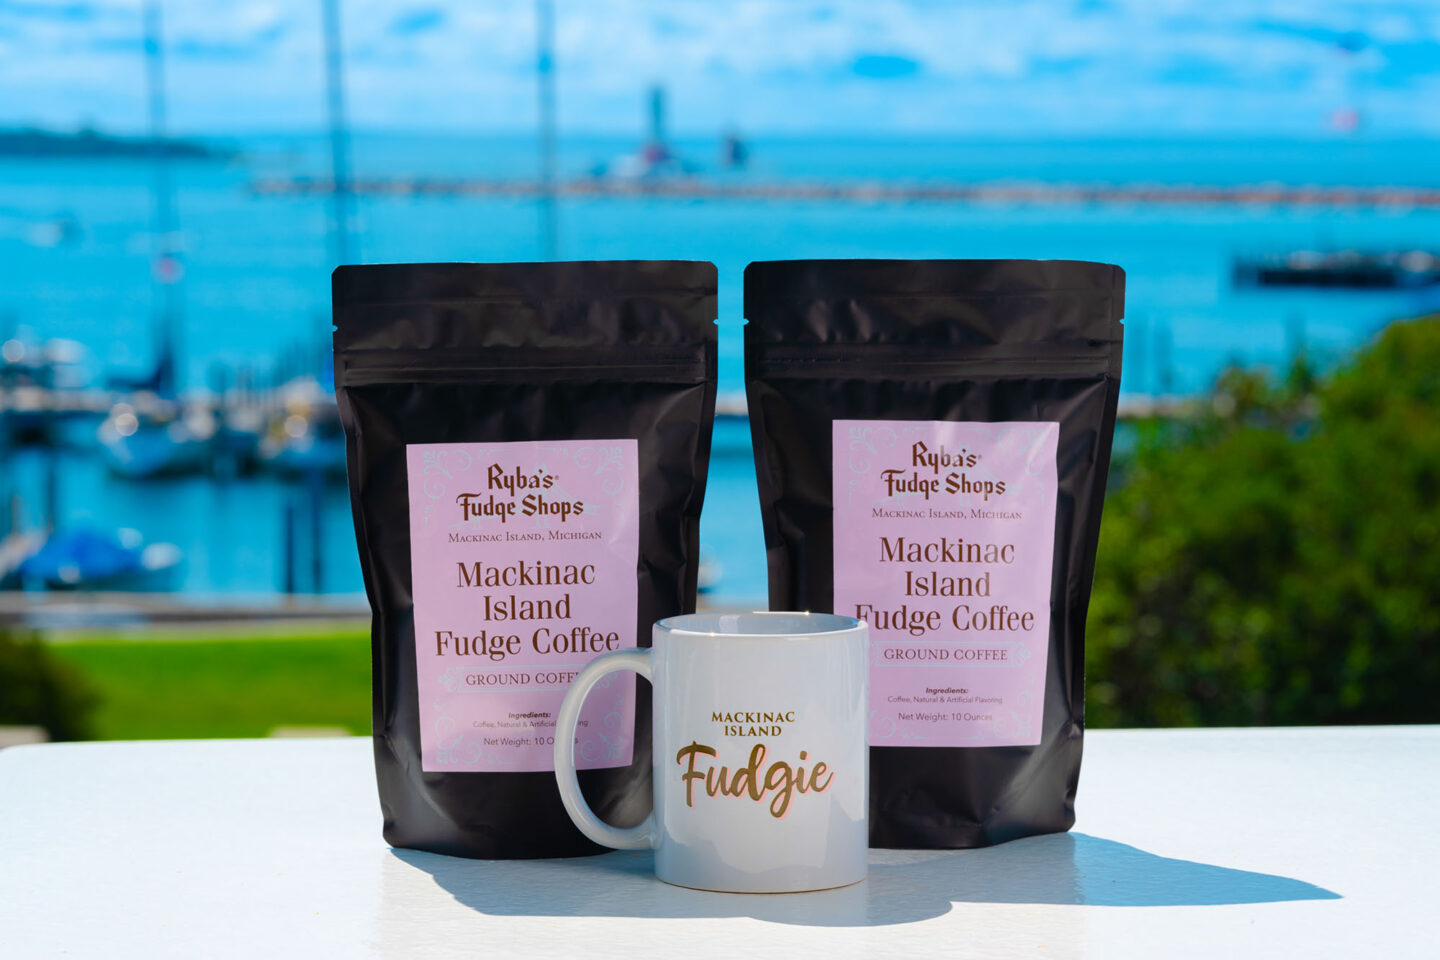 fudge flavored coffee from Rybas Mackinac Island Fudge